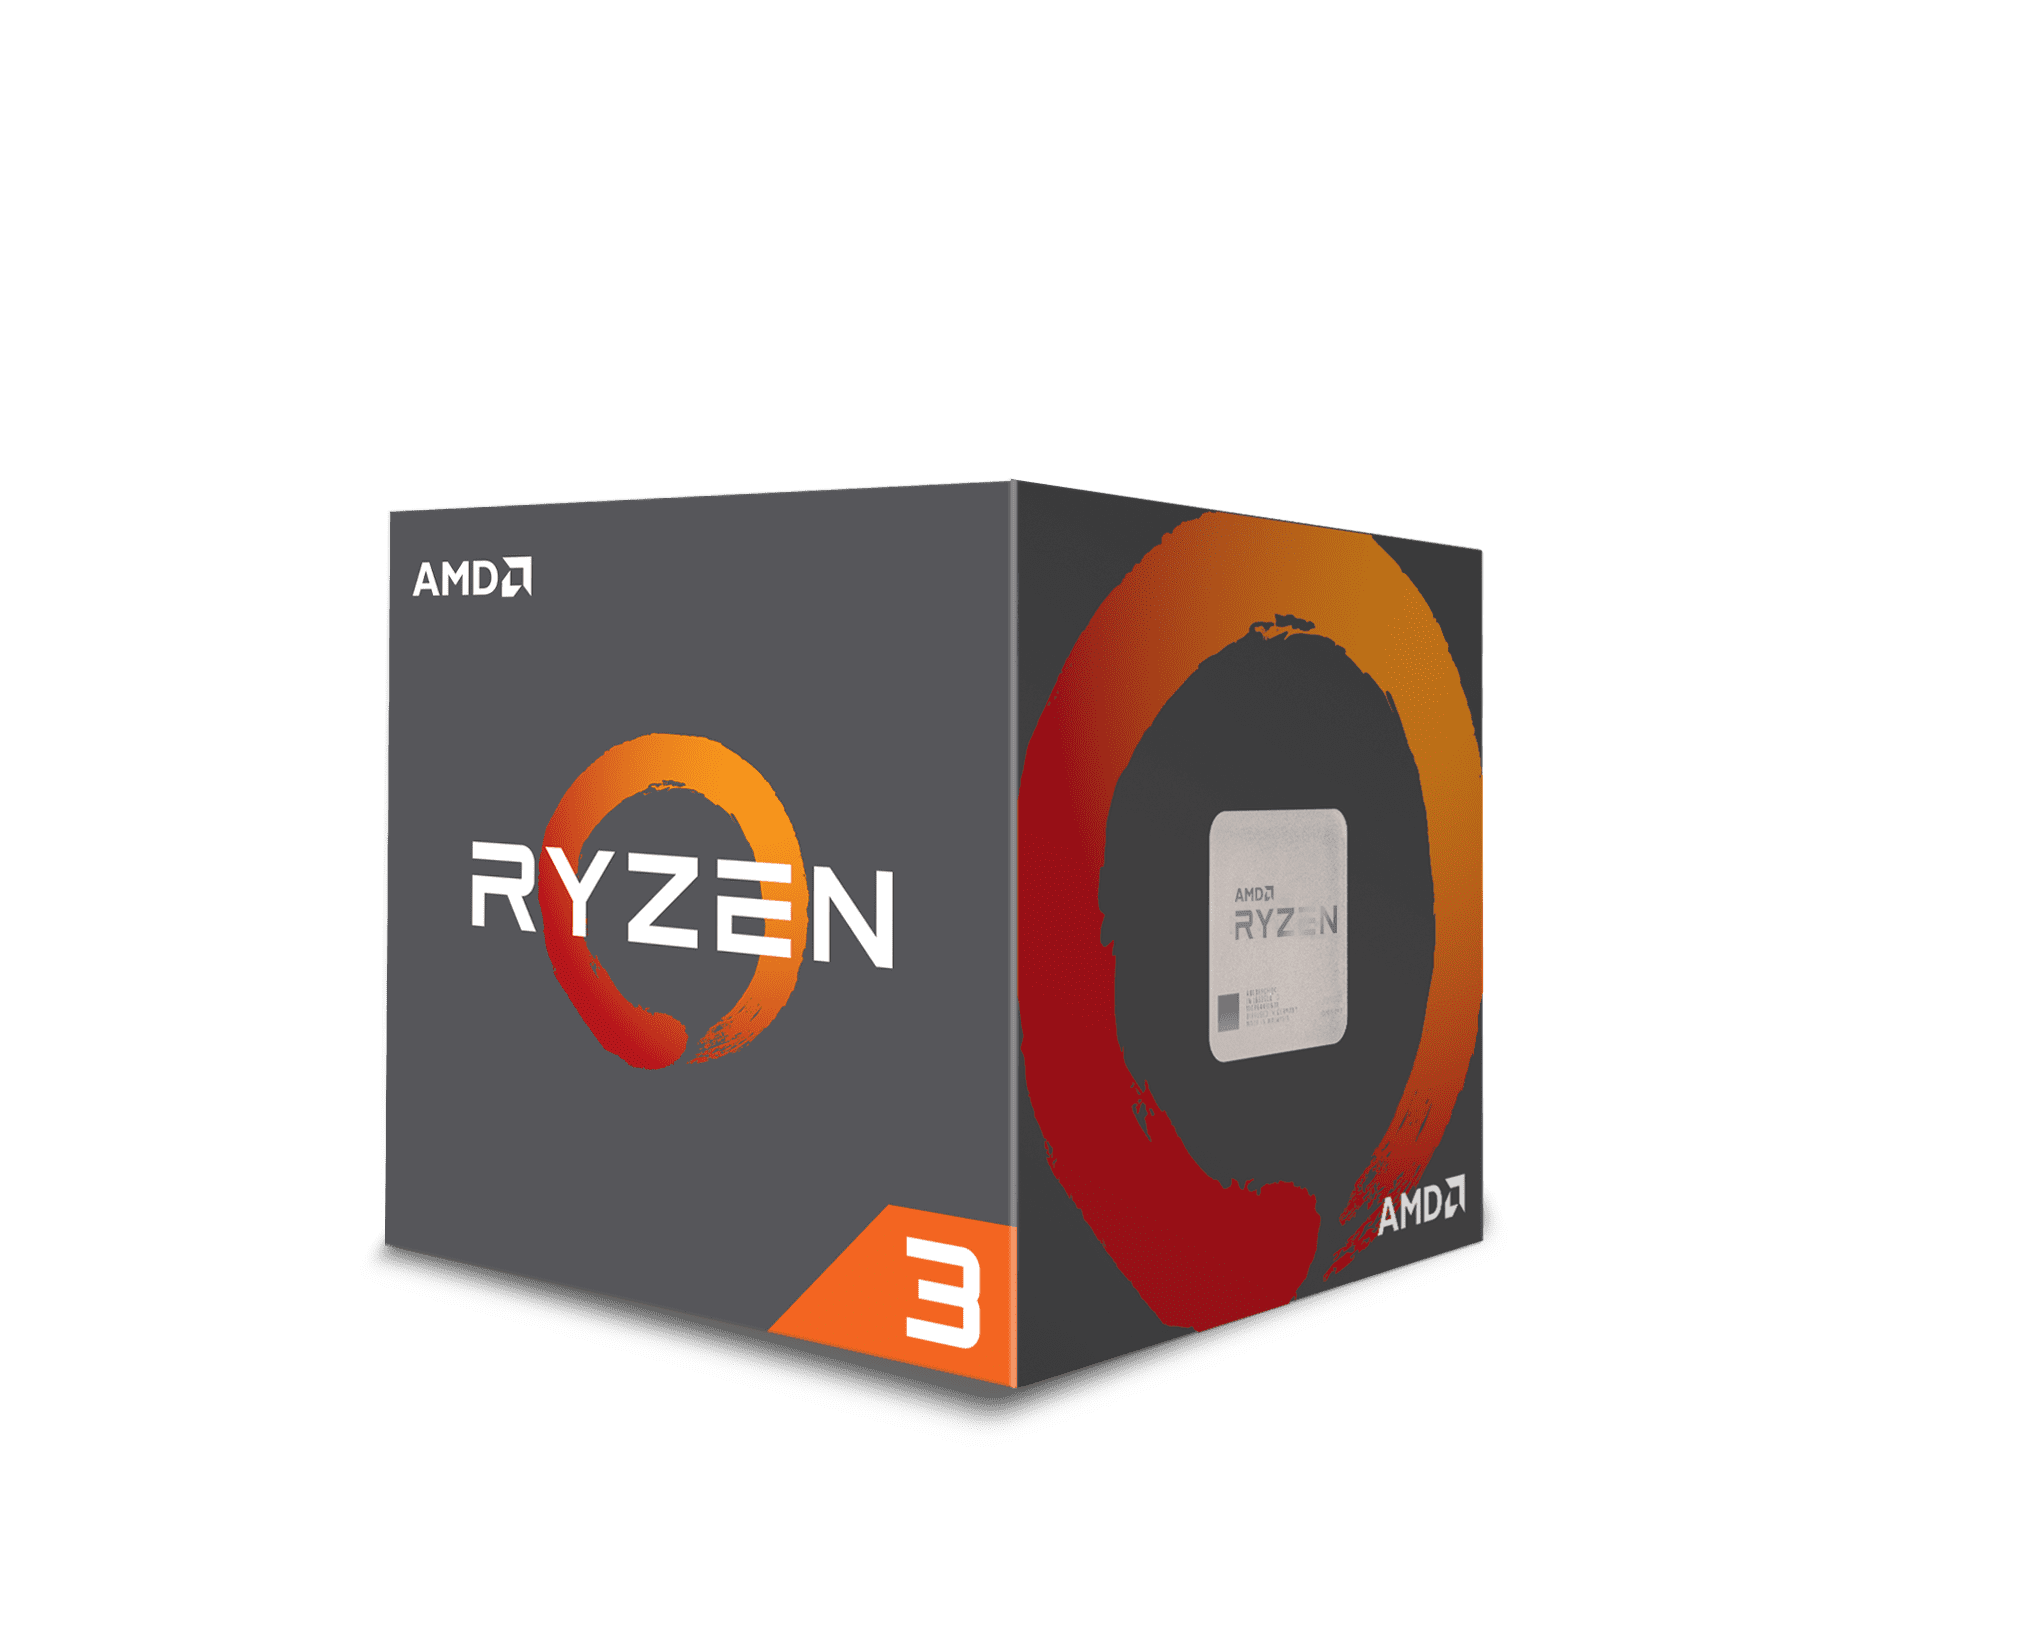 AMD Ryzen 3 3200G 4-Core 4.0 GHz AM4 Processor with Radeon Vega 8 Graphics